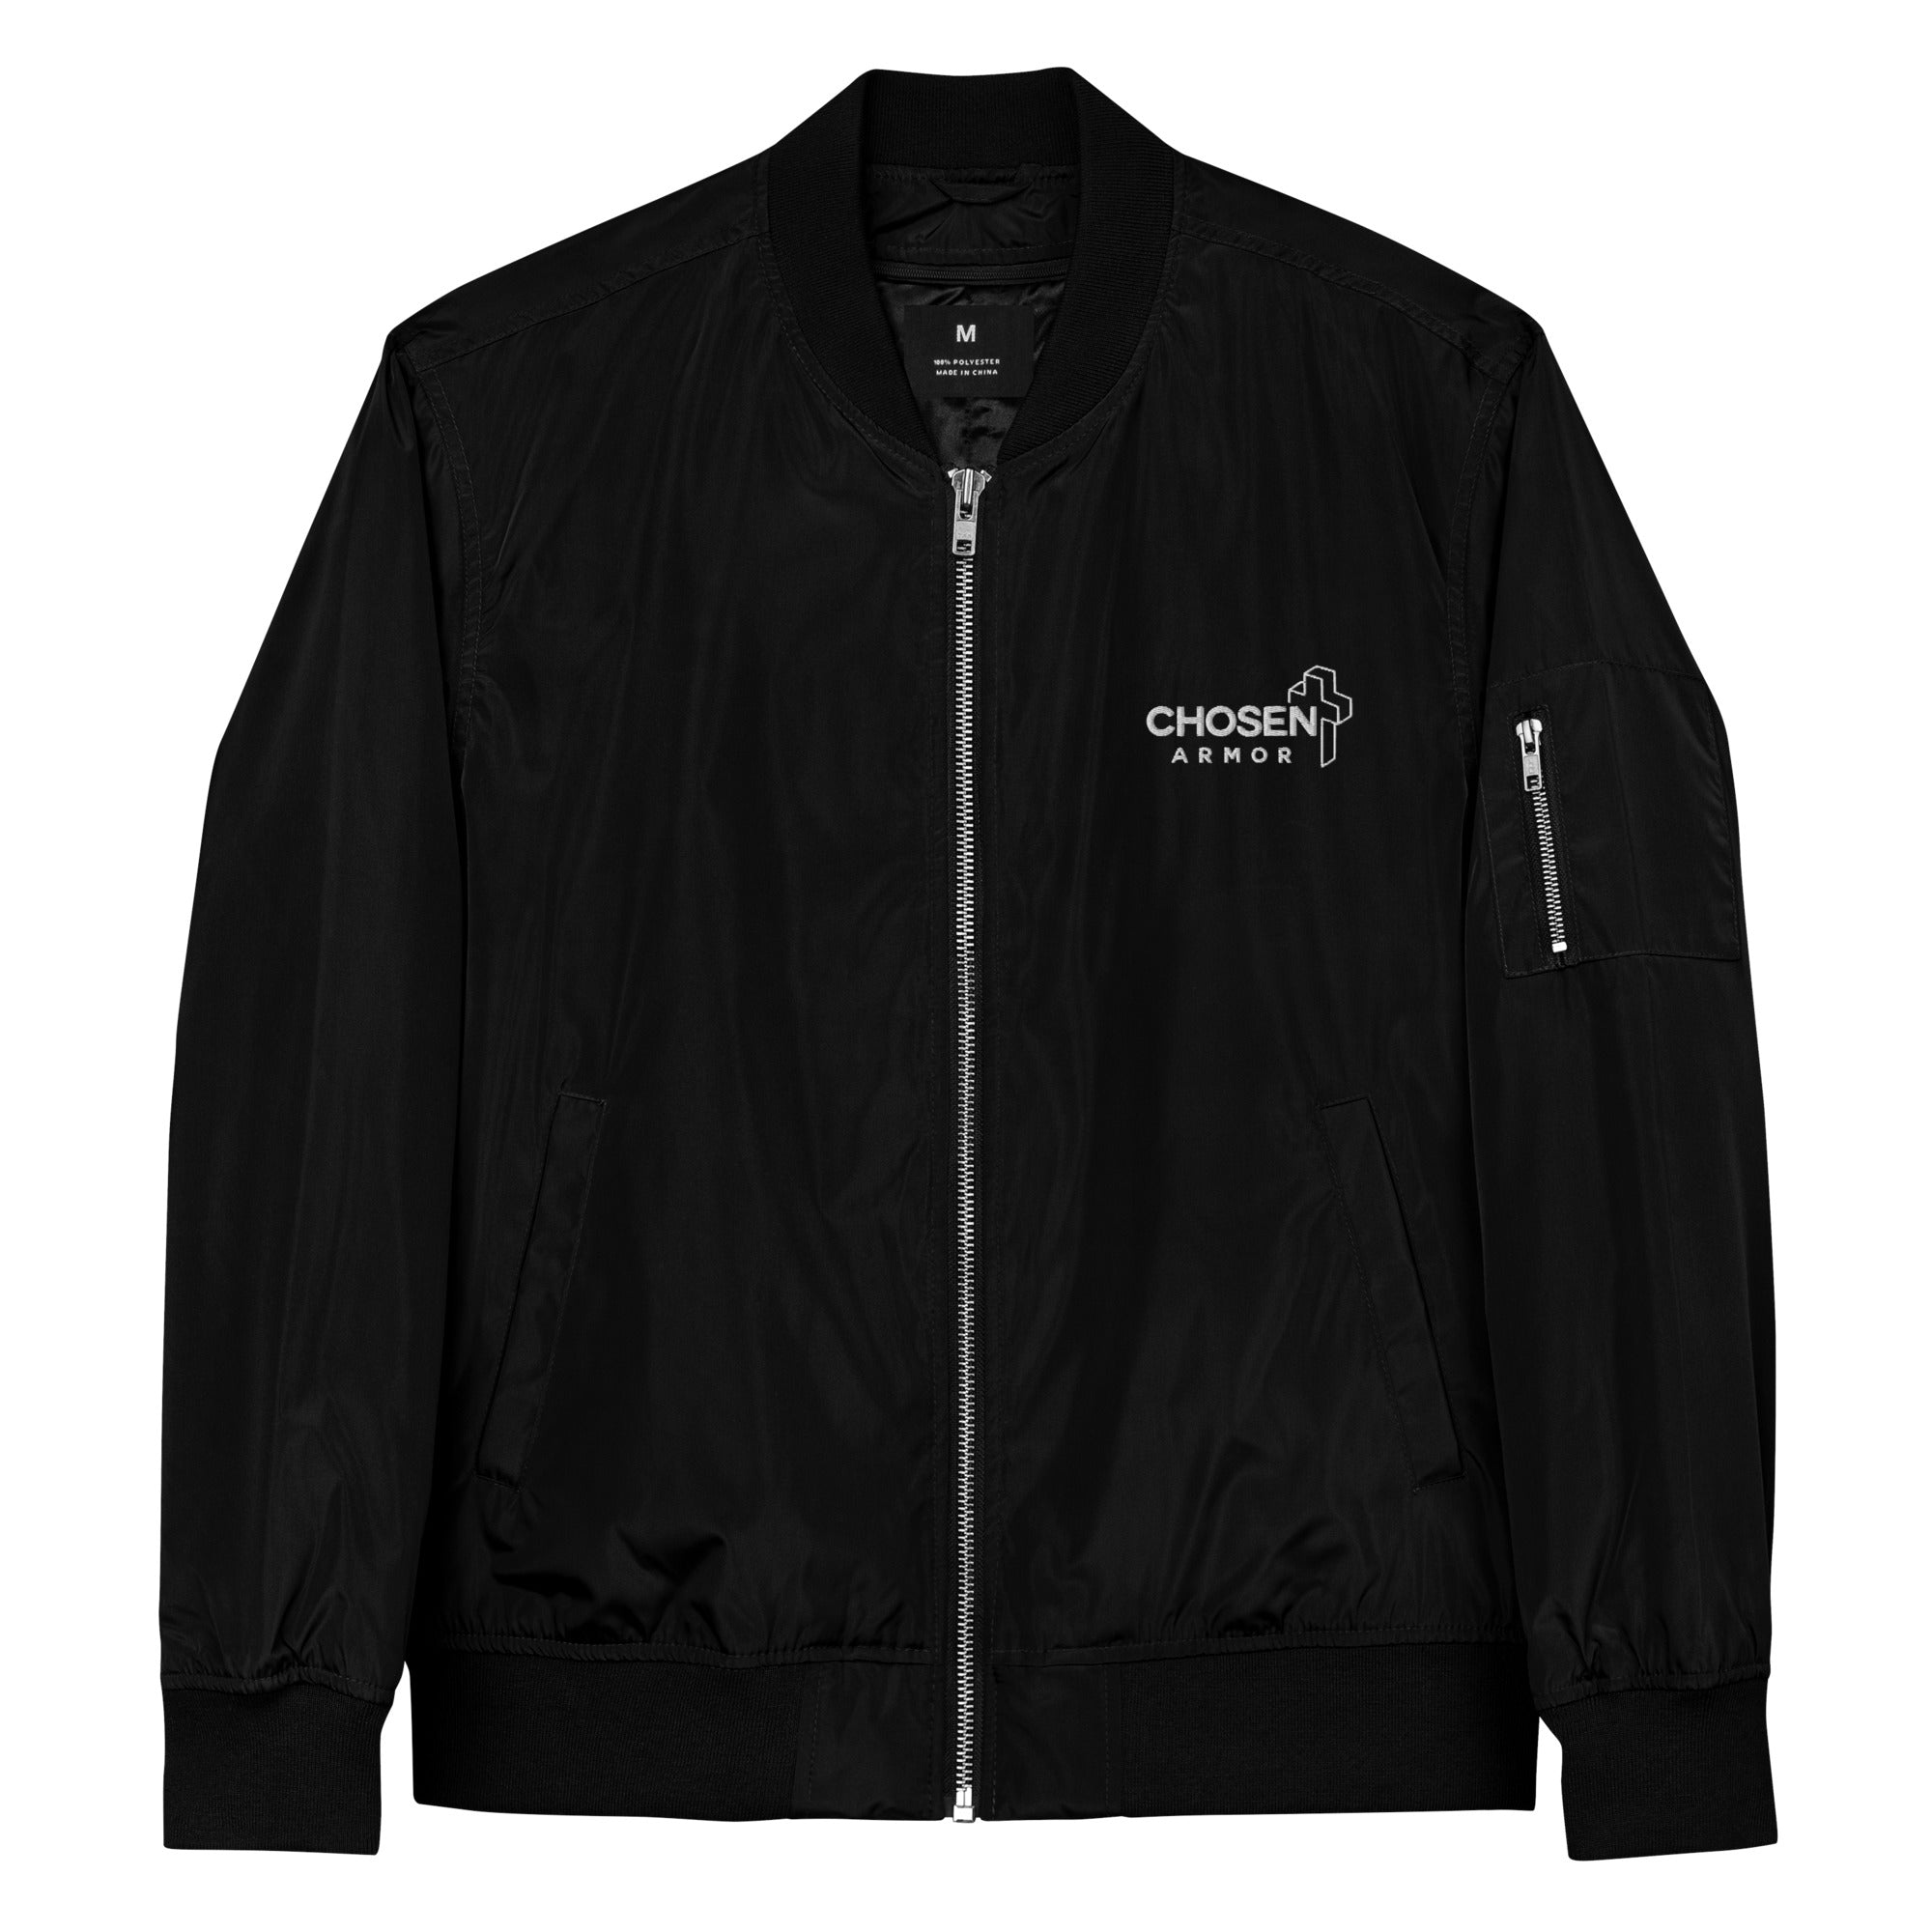 Chosen Armor | Premium Bomber jacket